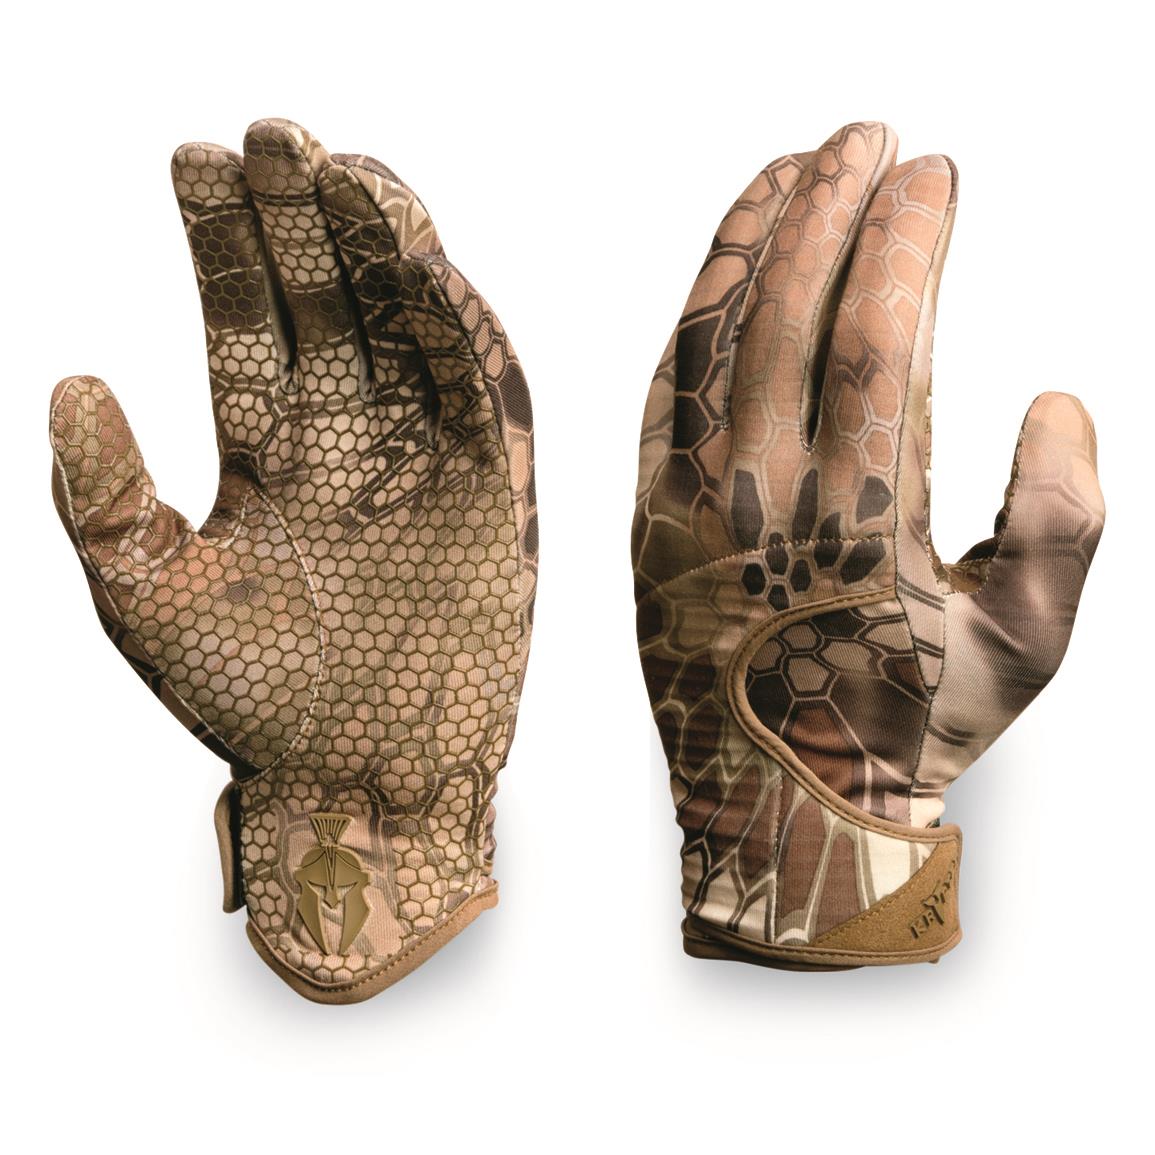 Camo Neoprene Gloves PU Palm Non-slip Waterproof size M Hunting Gloves 